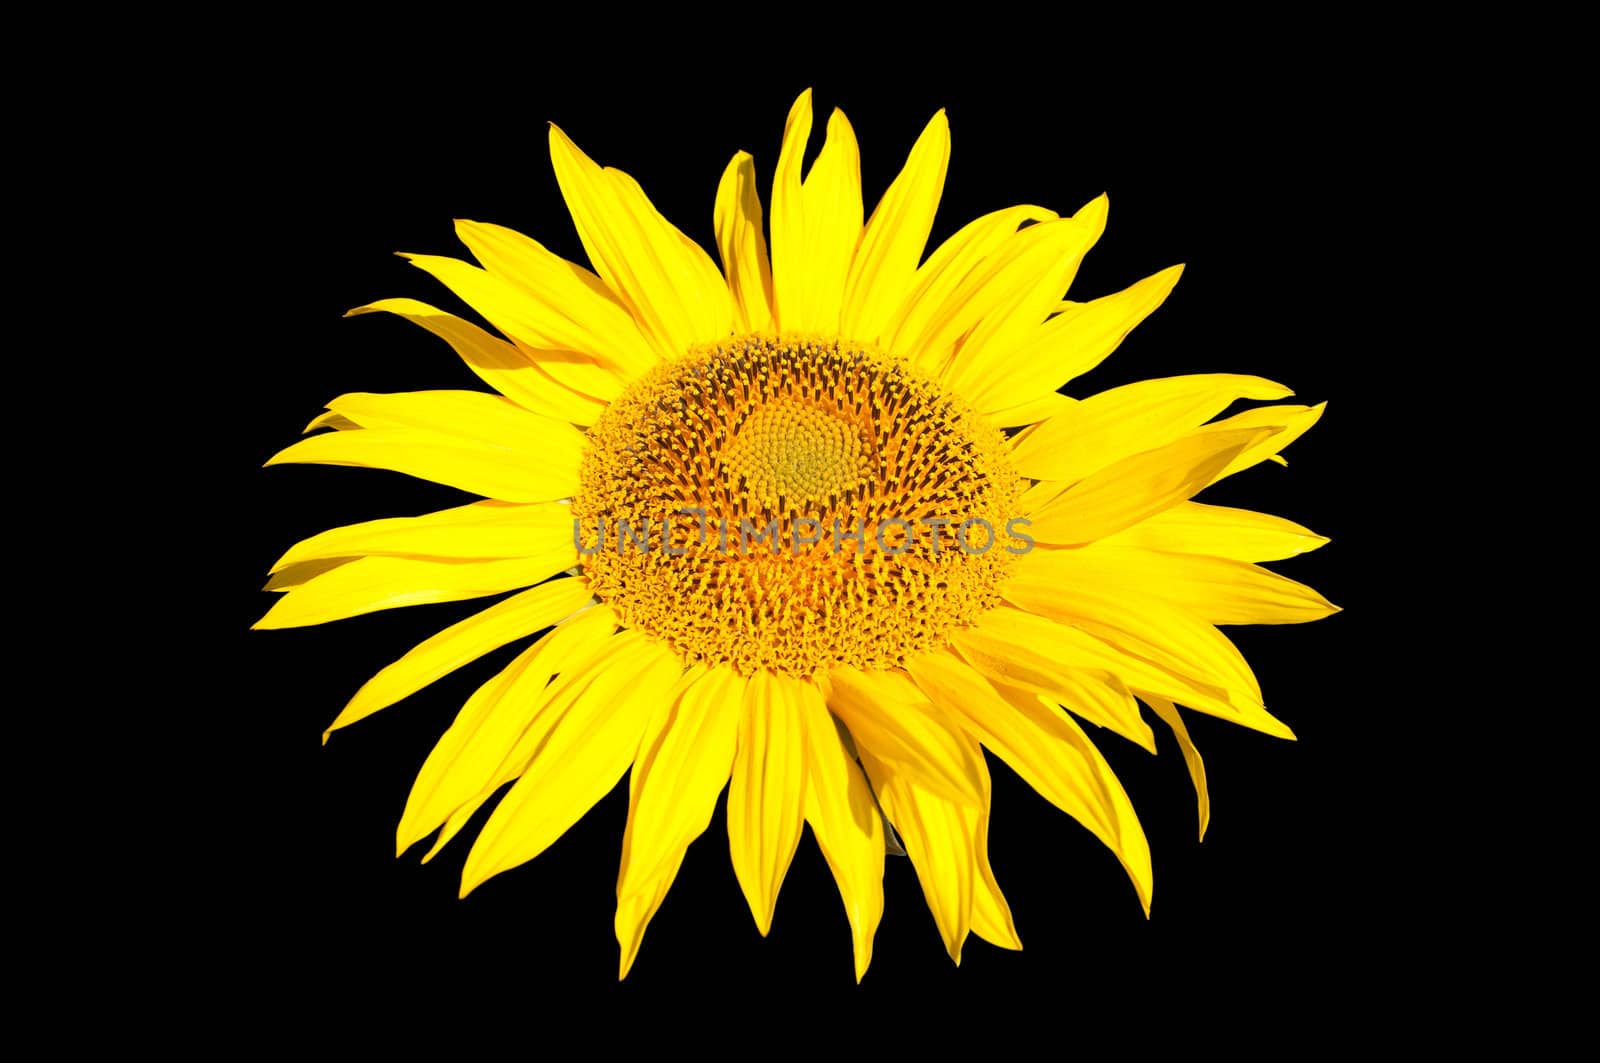 Sunflower isolated on black by satinka